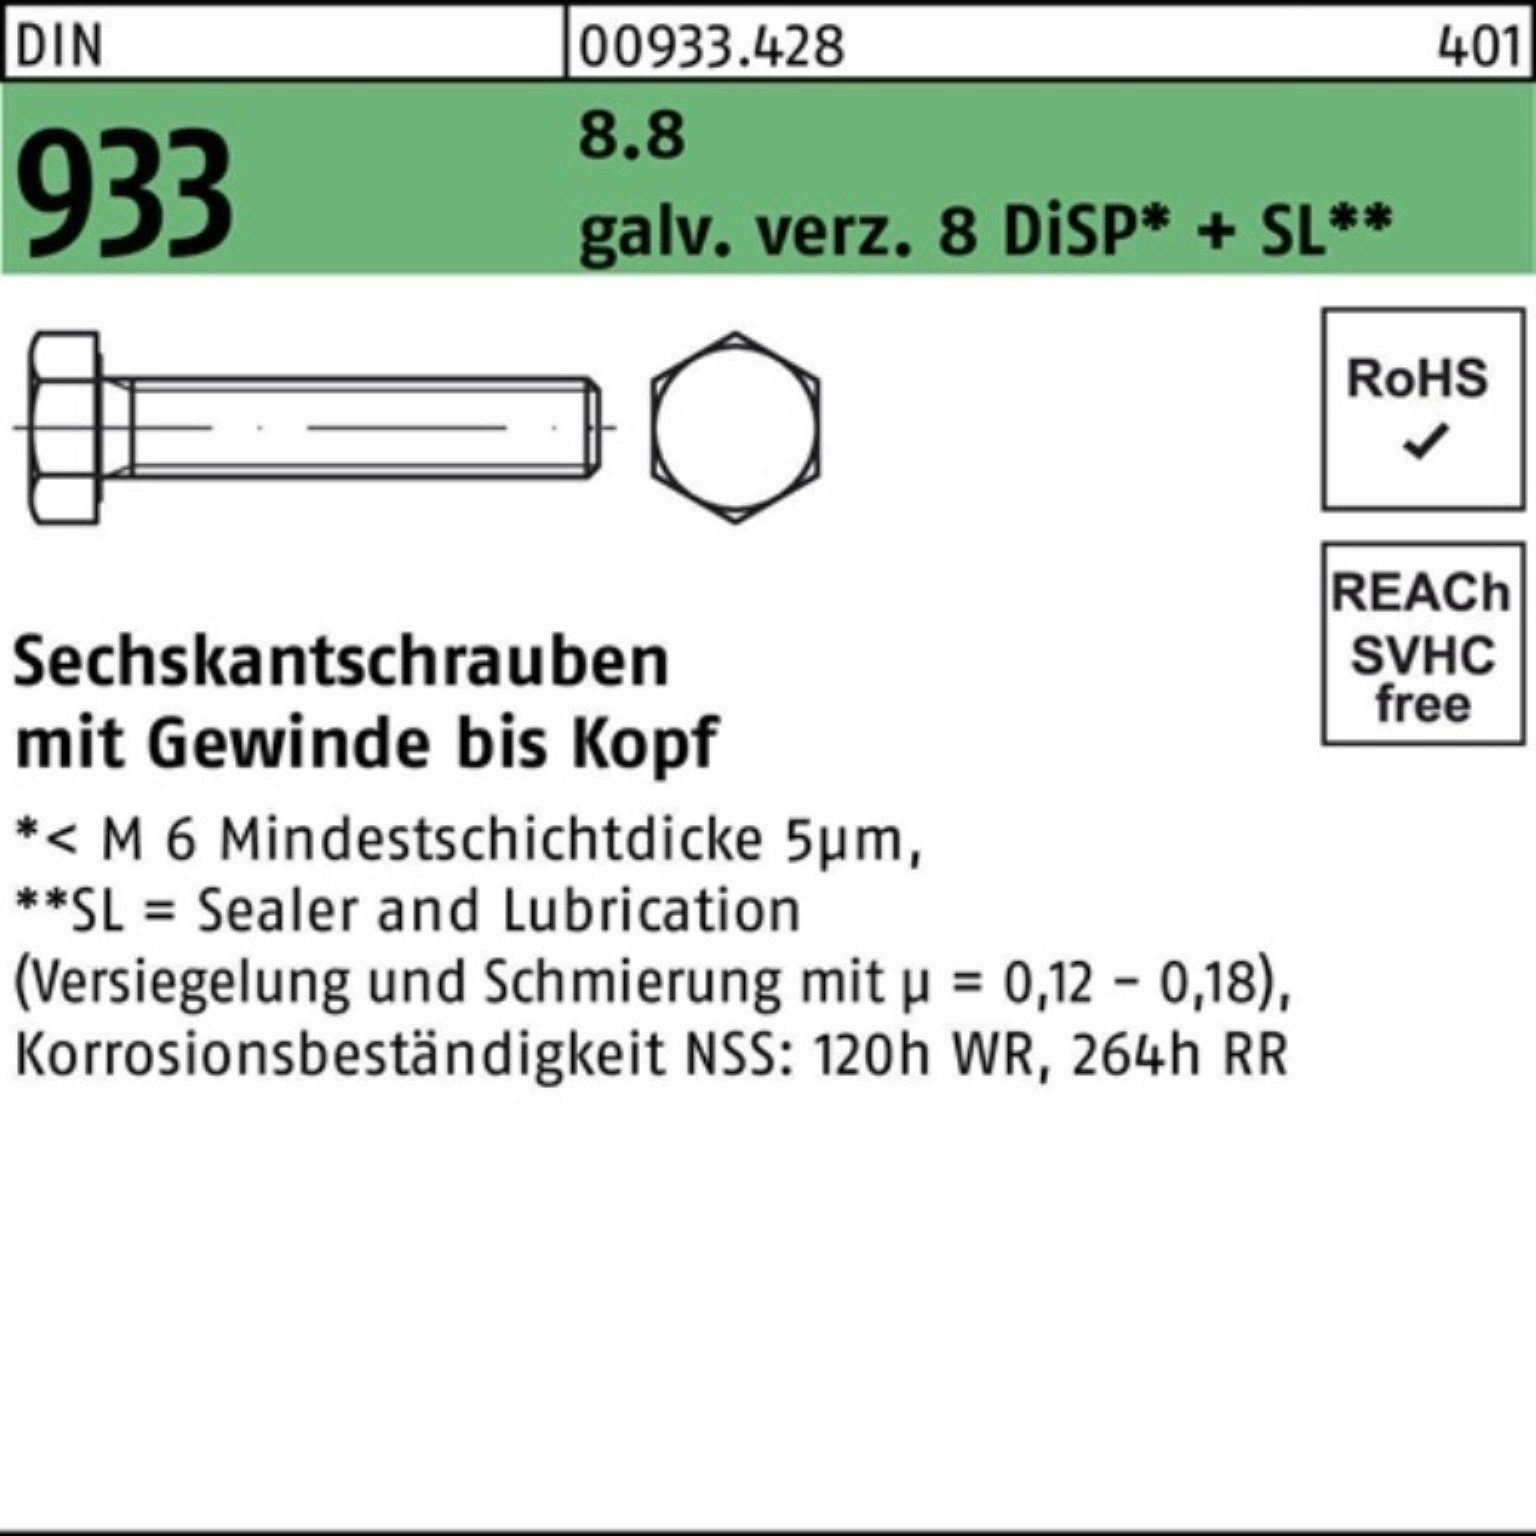 SL 35 VG 8.8 933 DIN + Sechskantschraube Sechskantschraube 500er Zn M4x Pack gal DiSP Reyher 50